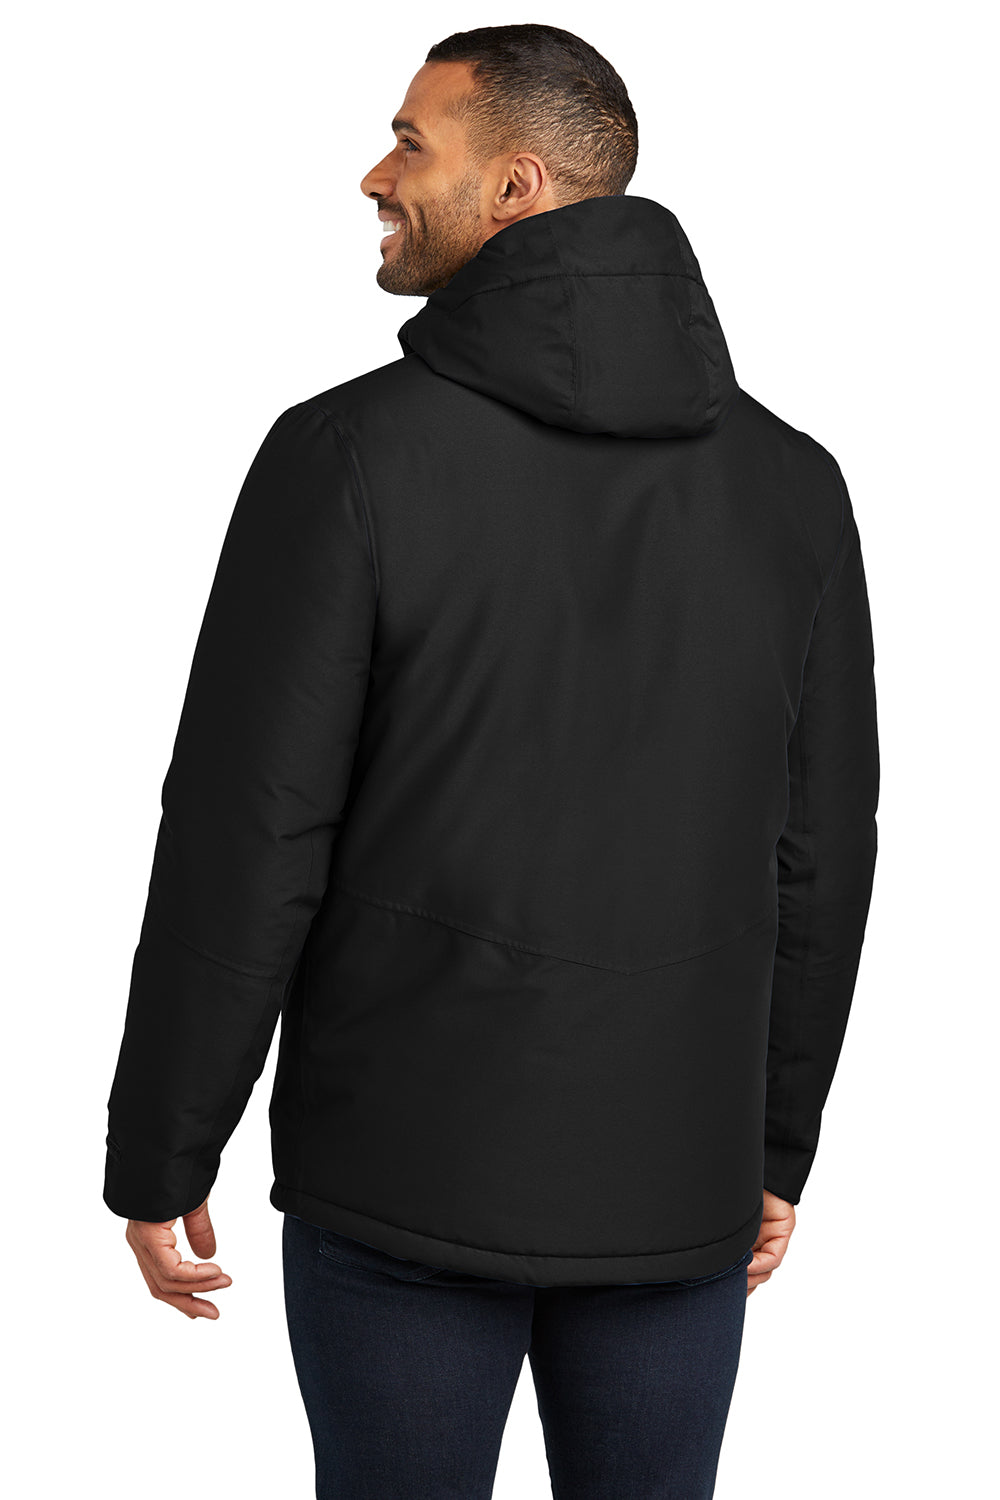 Port Authority J362 Mens Venture Waterproof Insulated Full Zip Hooded Jacket Deep Black Back